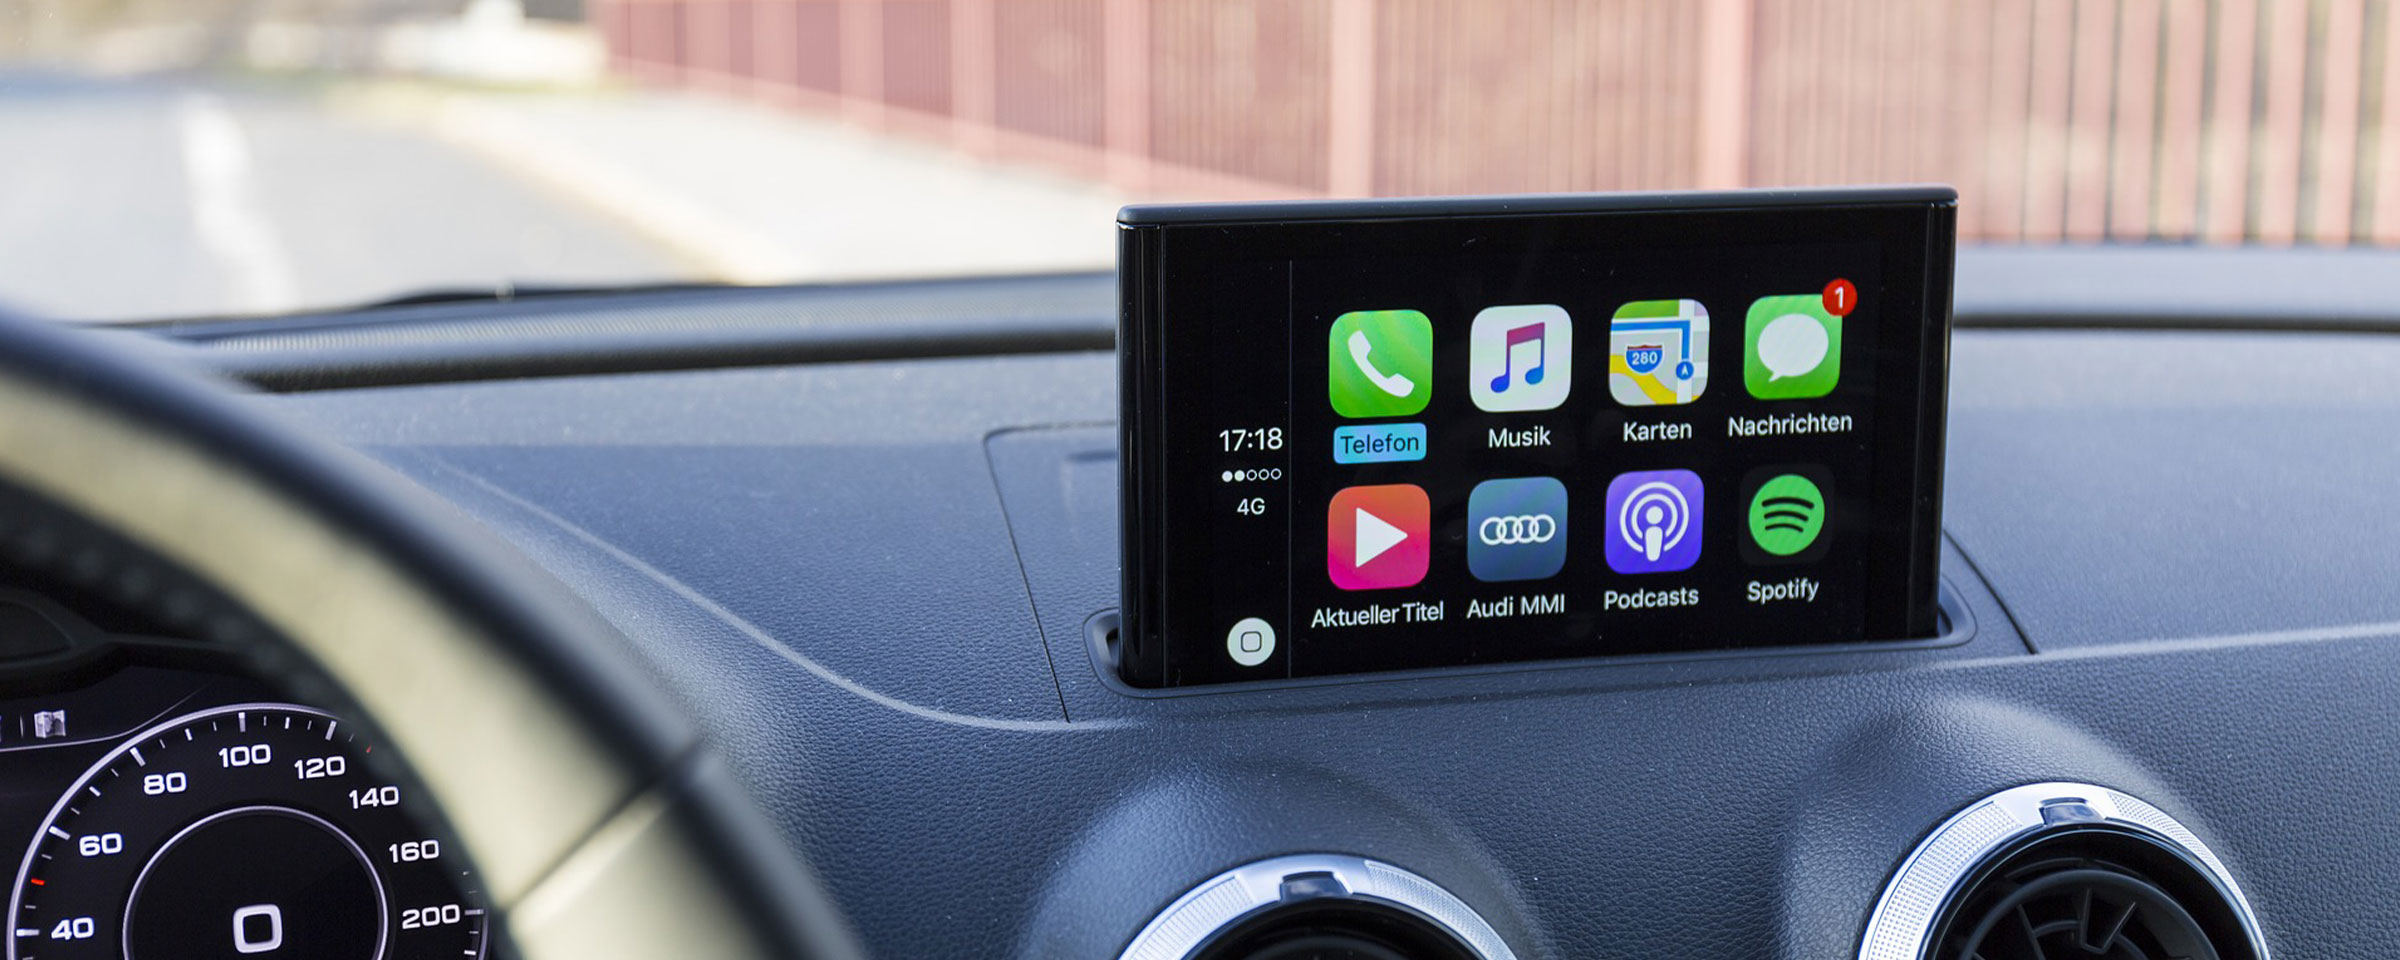 Apple CarPlay in a car interior